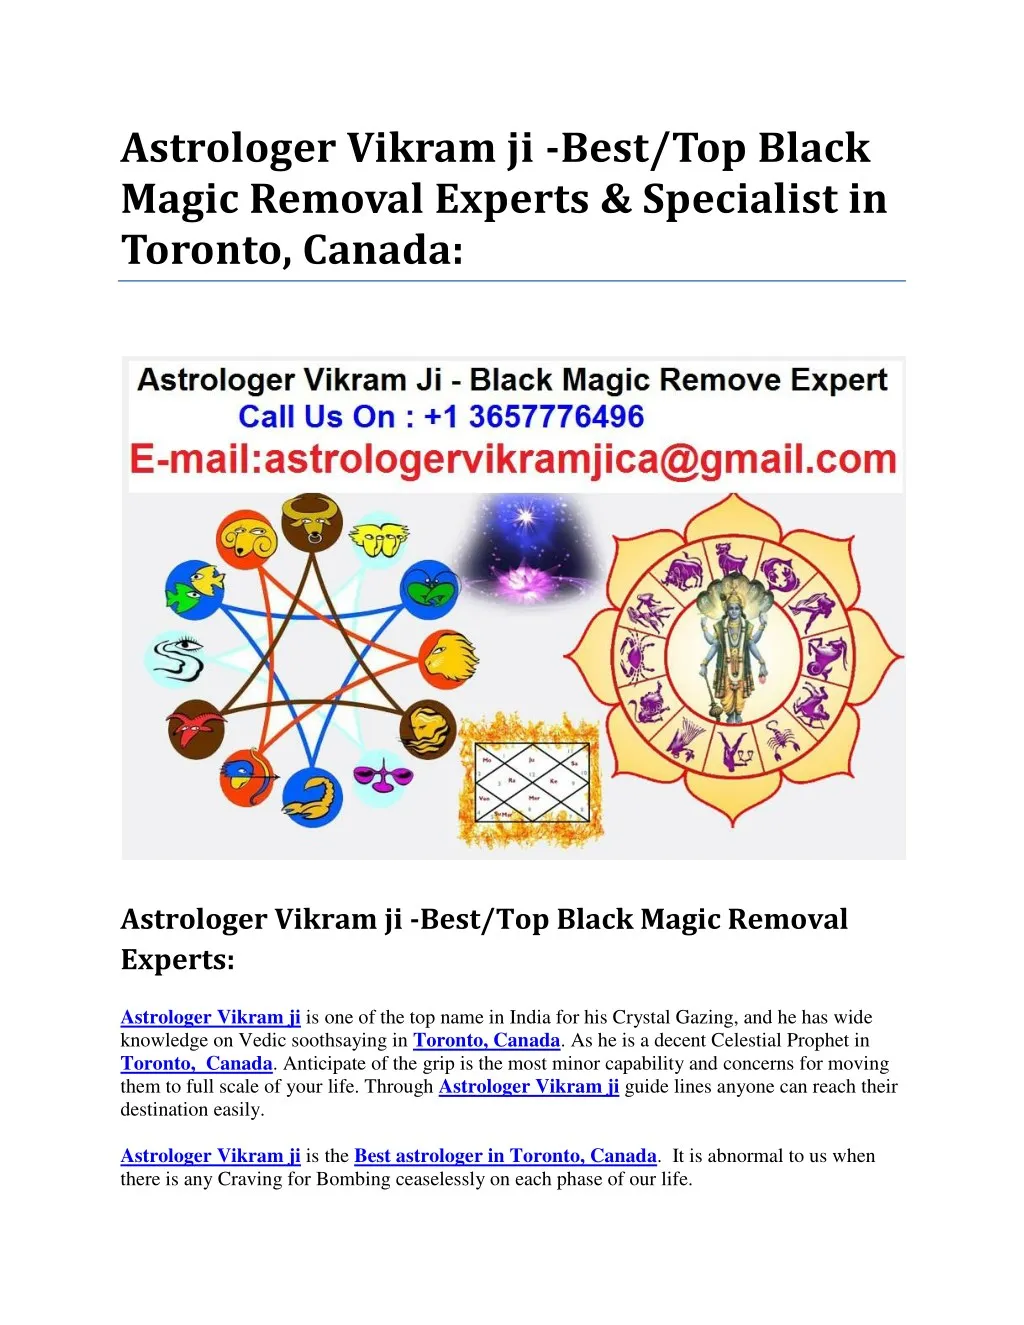 astrologer vikram ji best top black magic removal